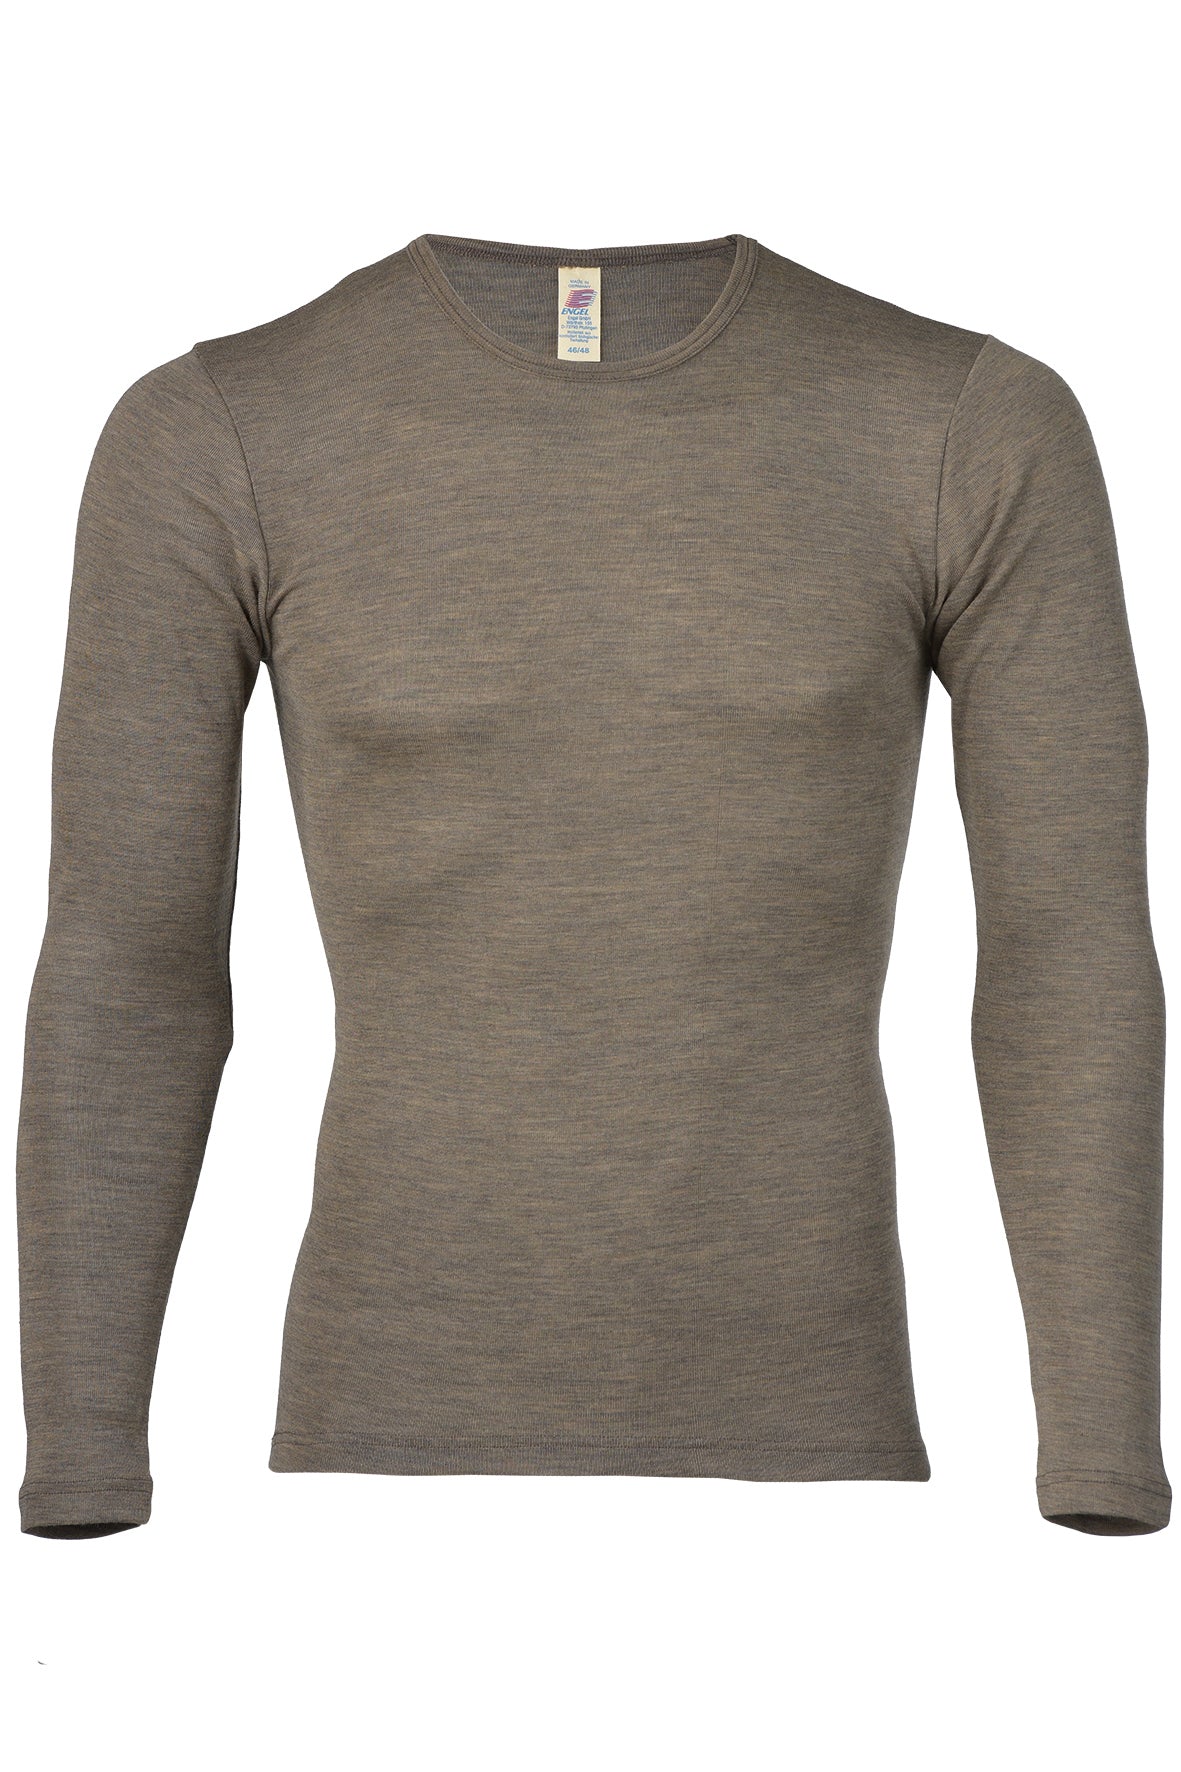 Engel Child Long Sleeve Shirt - Merino Wool/Silk – Warmth and Weather